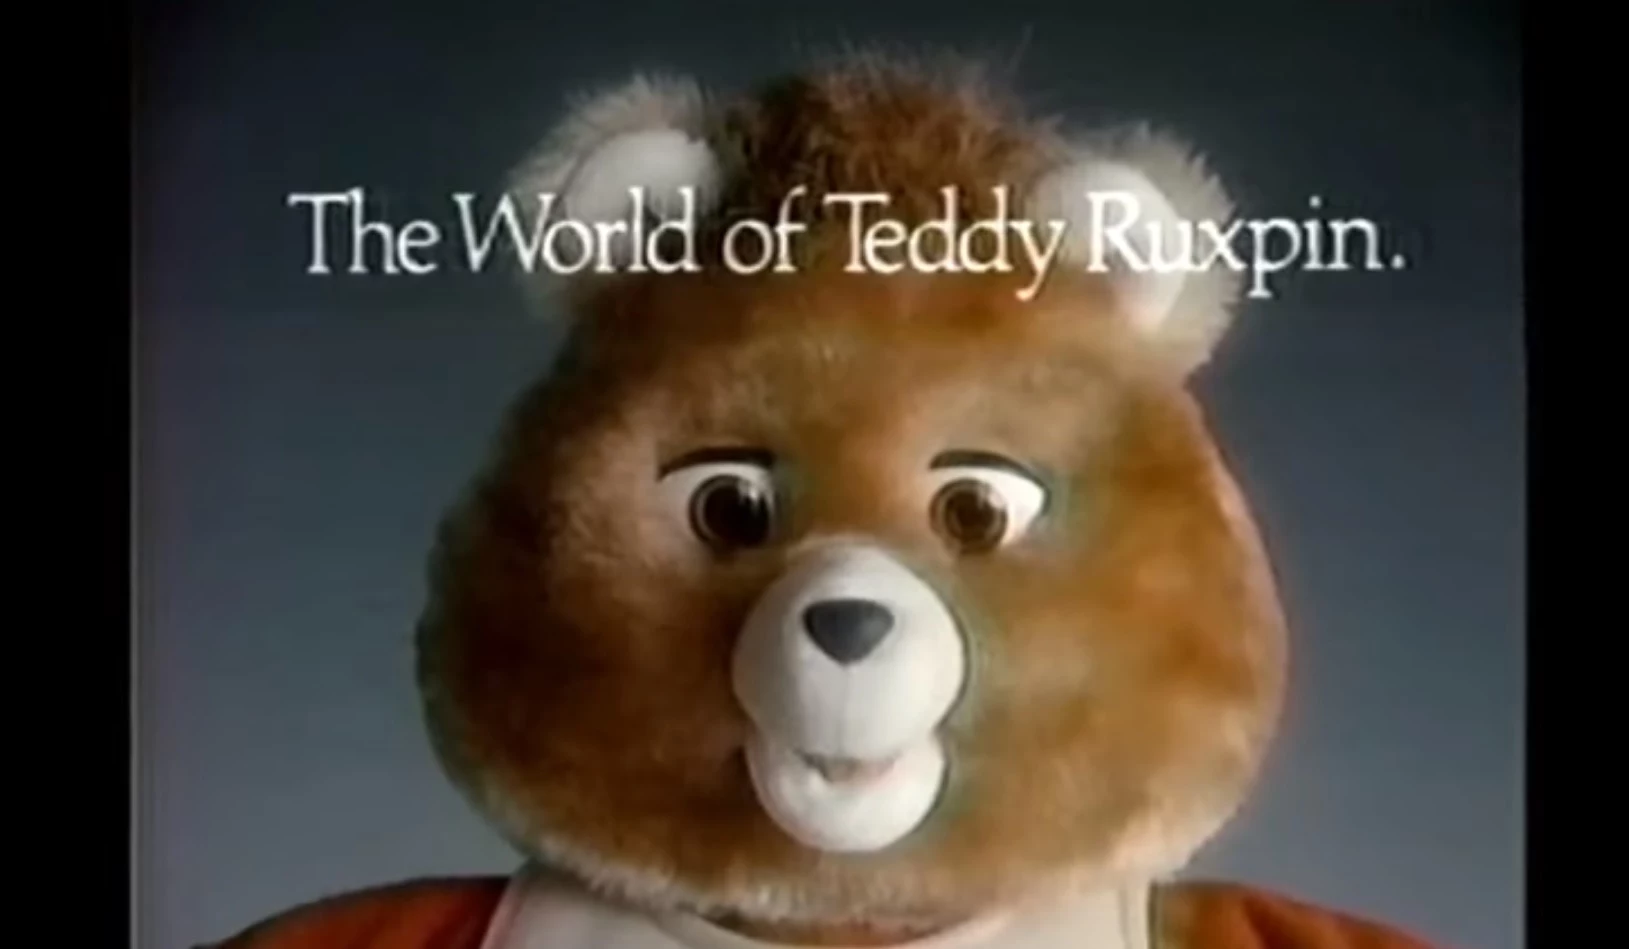 teddy ruxpin 1986